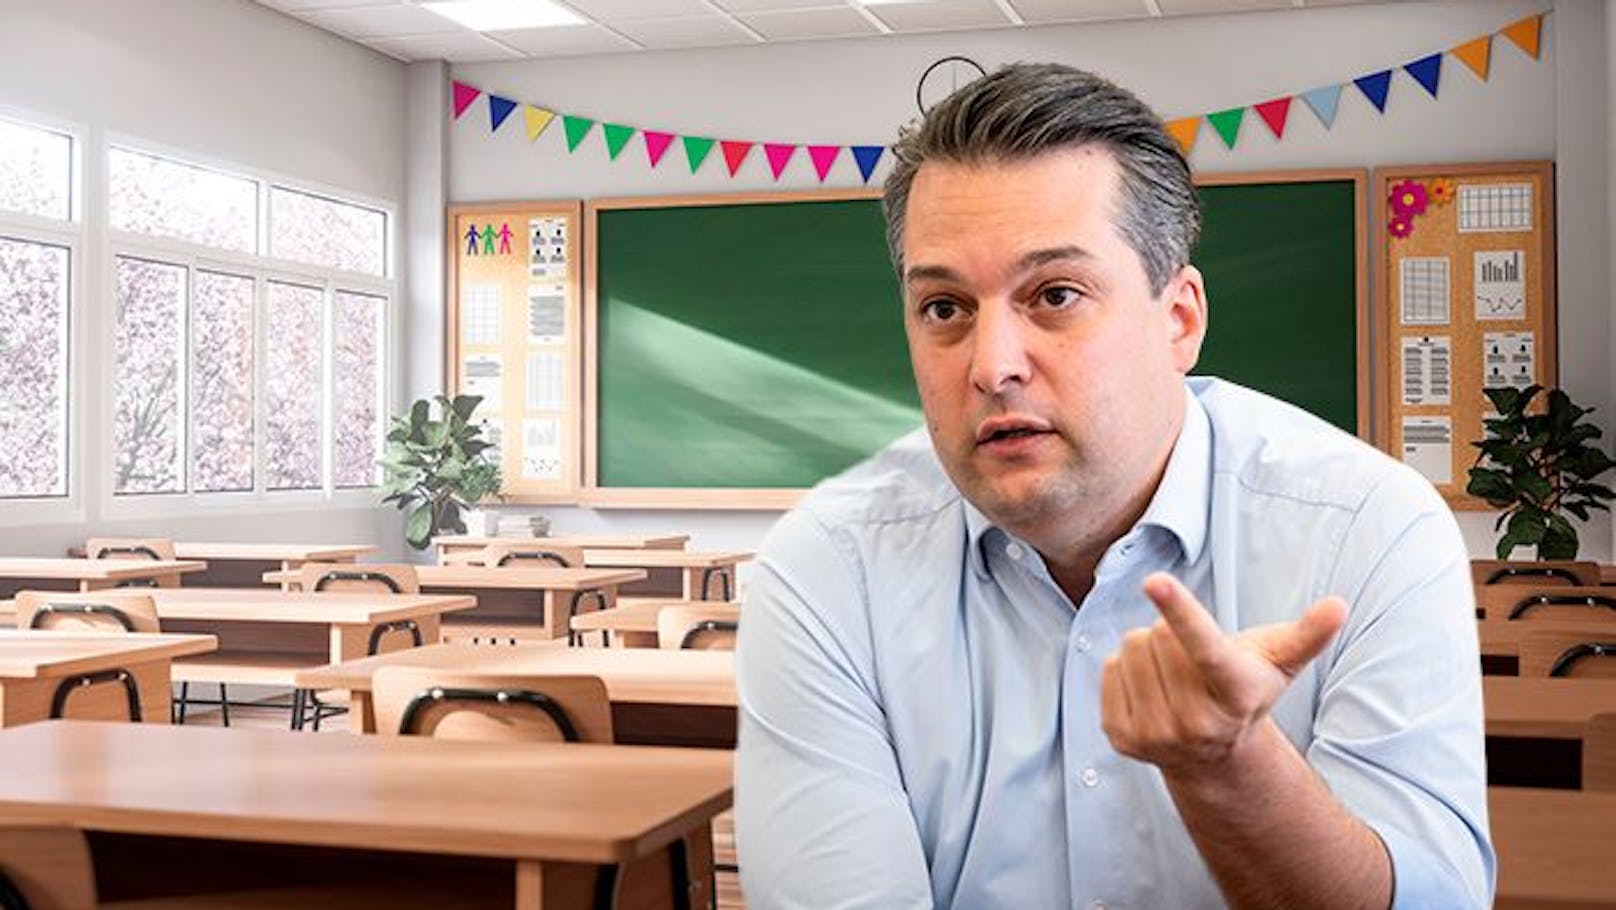 Nackt-Bub in Schule: FPÖ-Nepp warnt vor Massenmigration